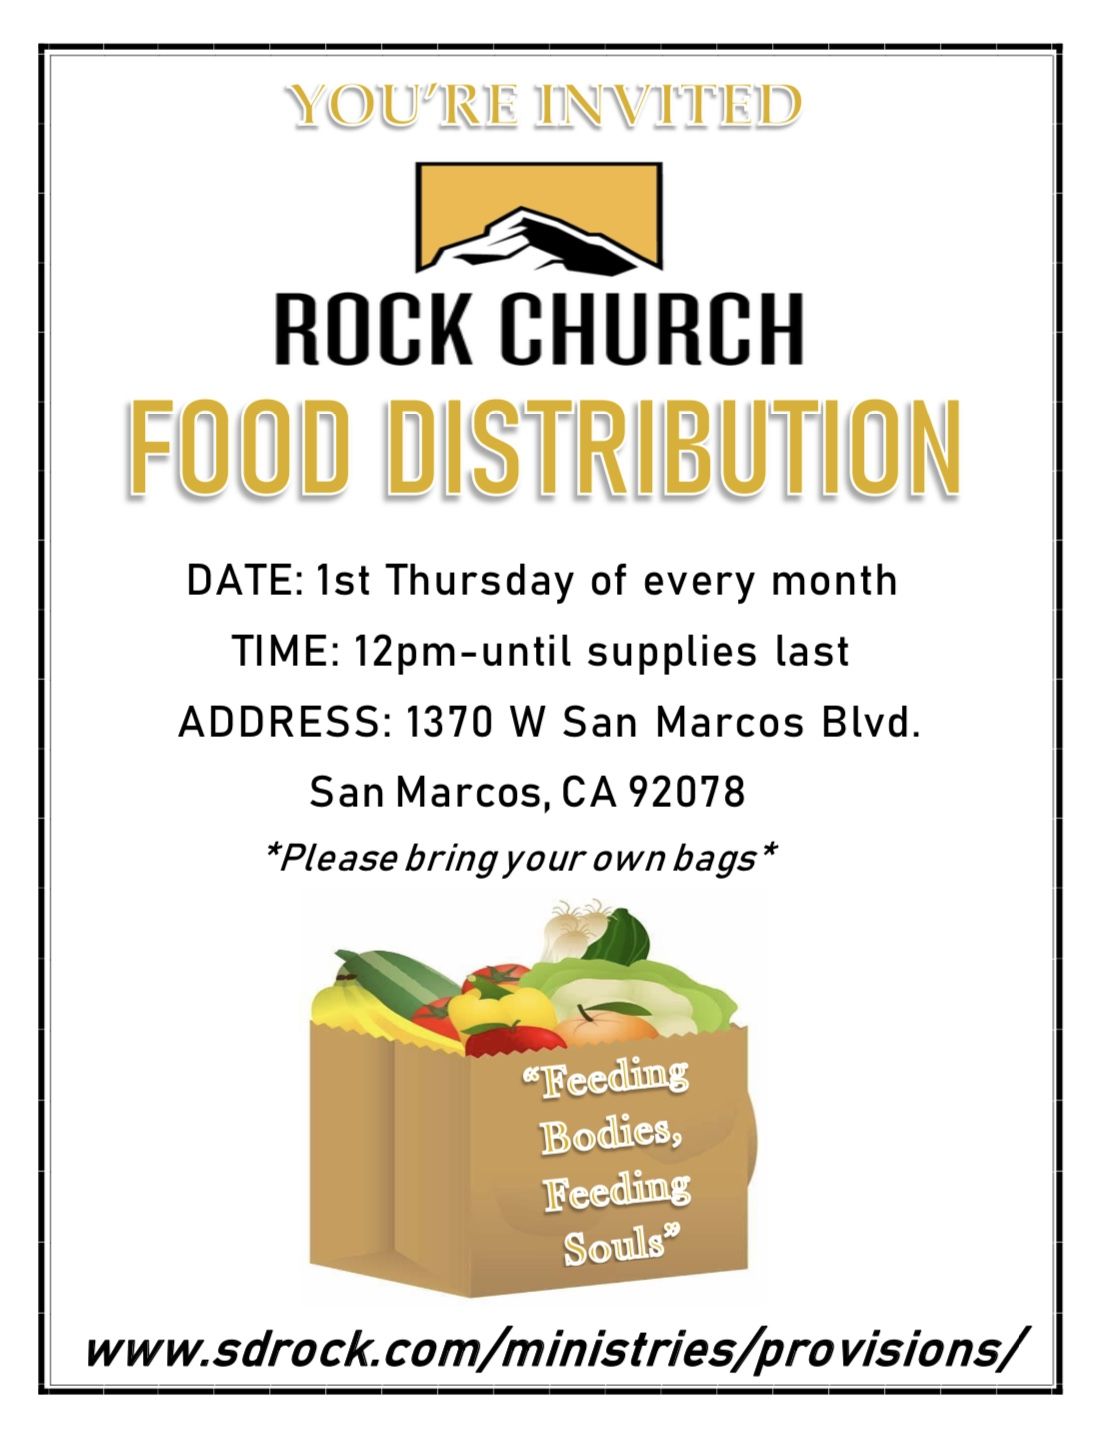 Rock Church San Marcos Provisions